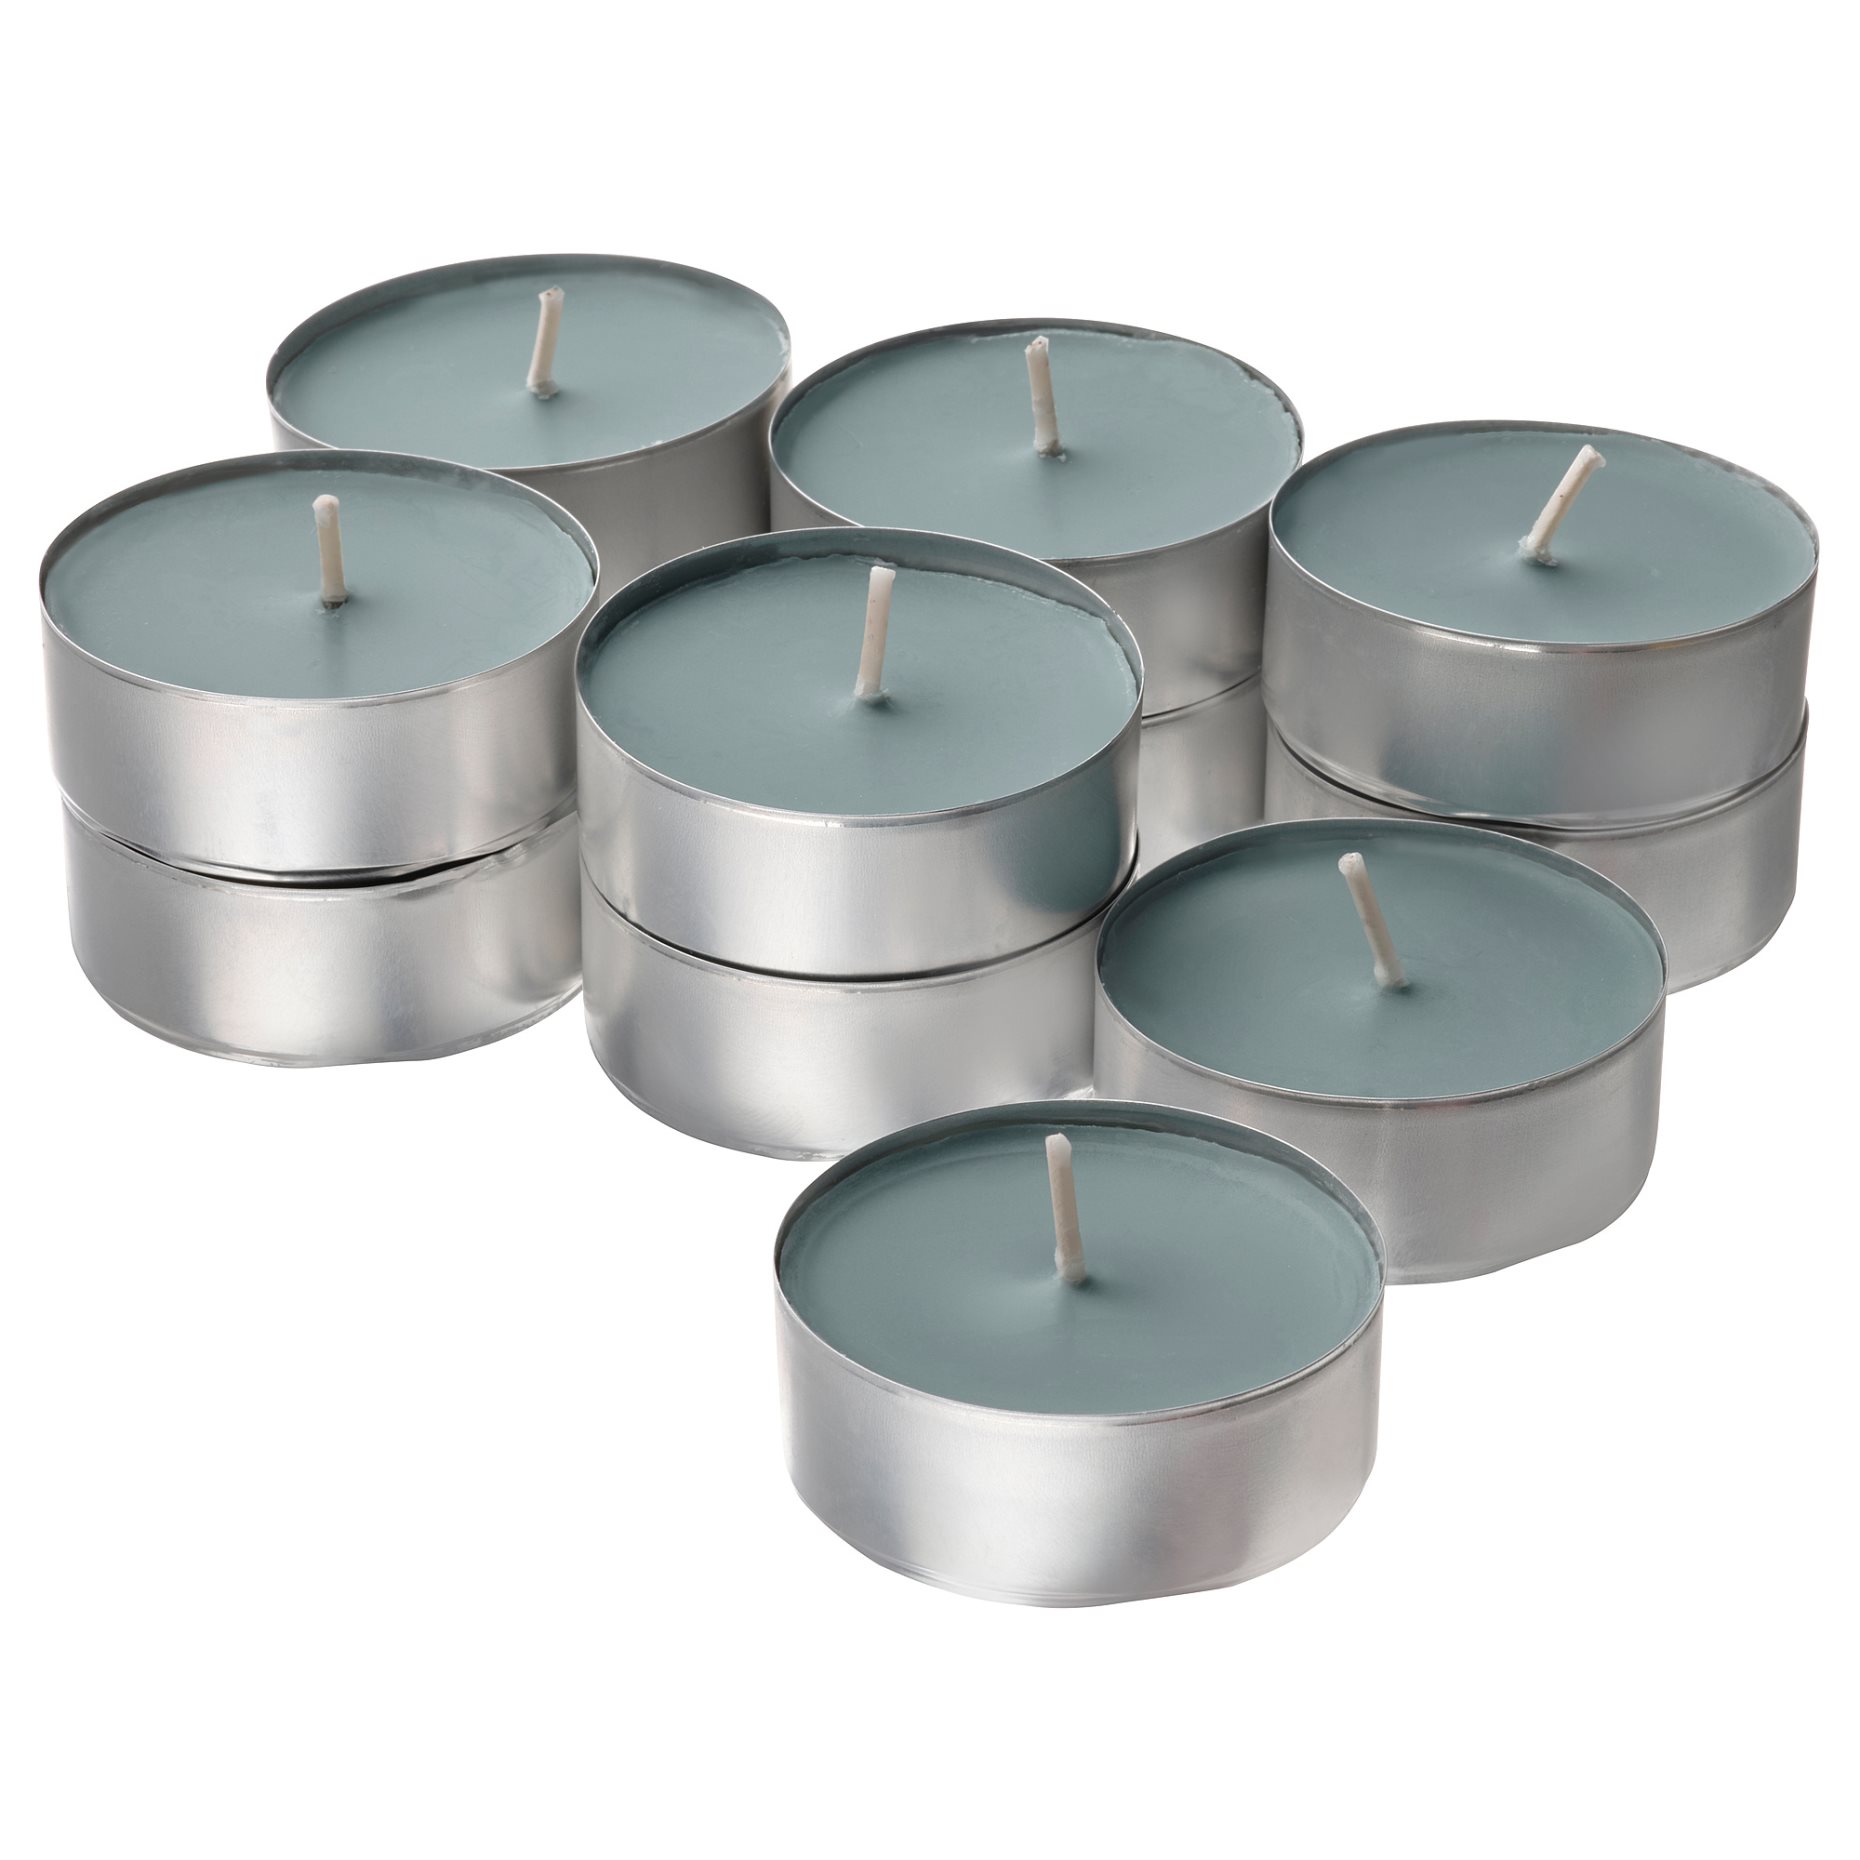 fragranced tealights 59mm diameter 9 hour burn time aroma individual 